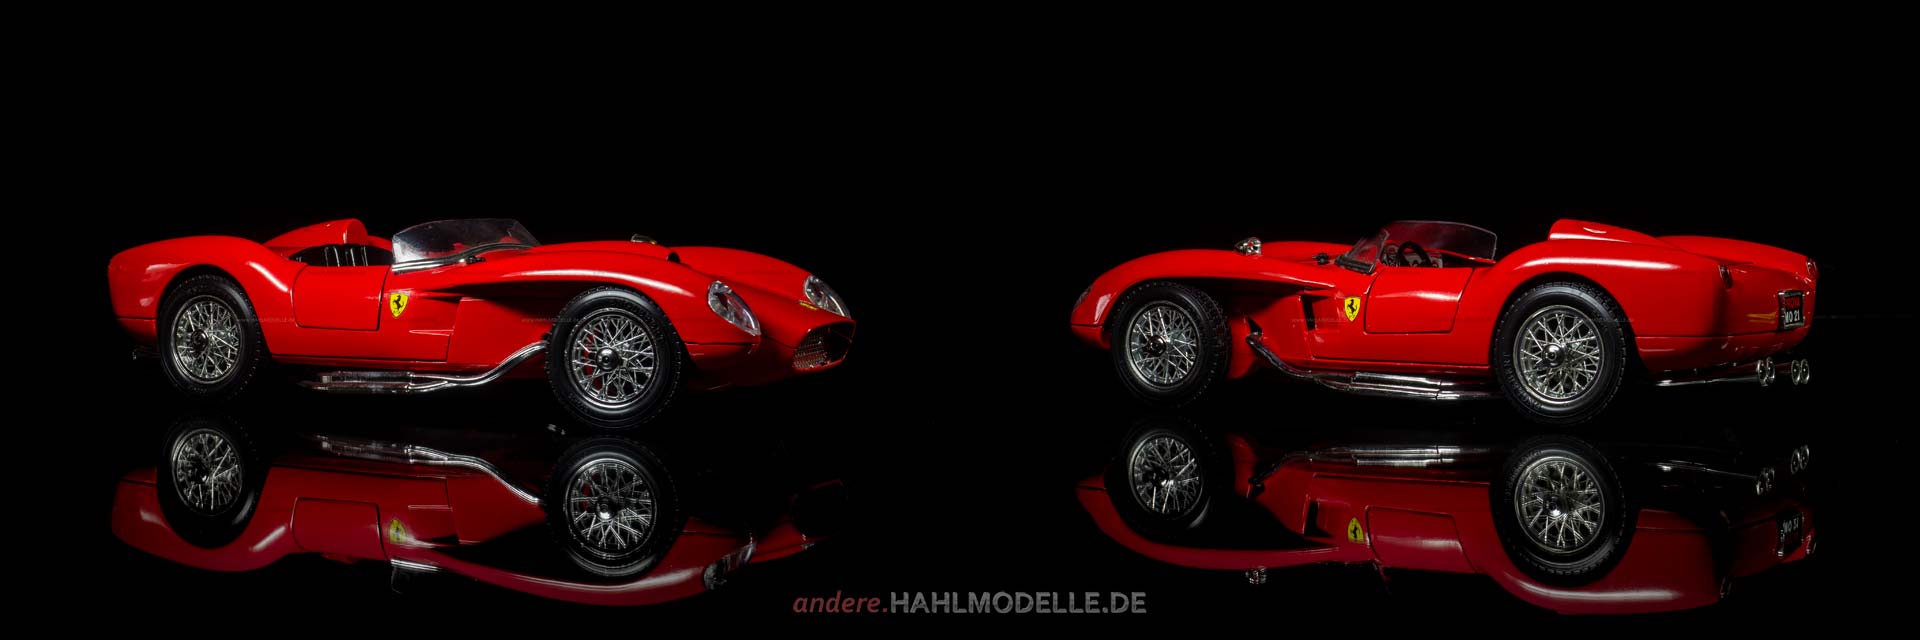 Ferrari 250 Testa Rossa | Roadster | Bburago | 1:18 | www.andere.hahlmodelle.de